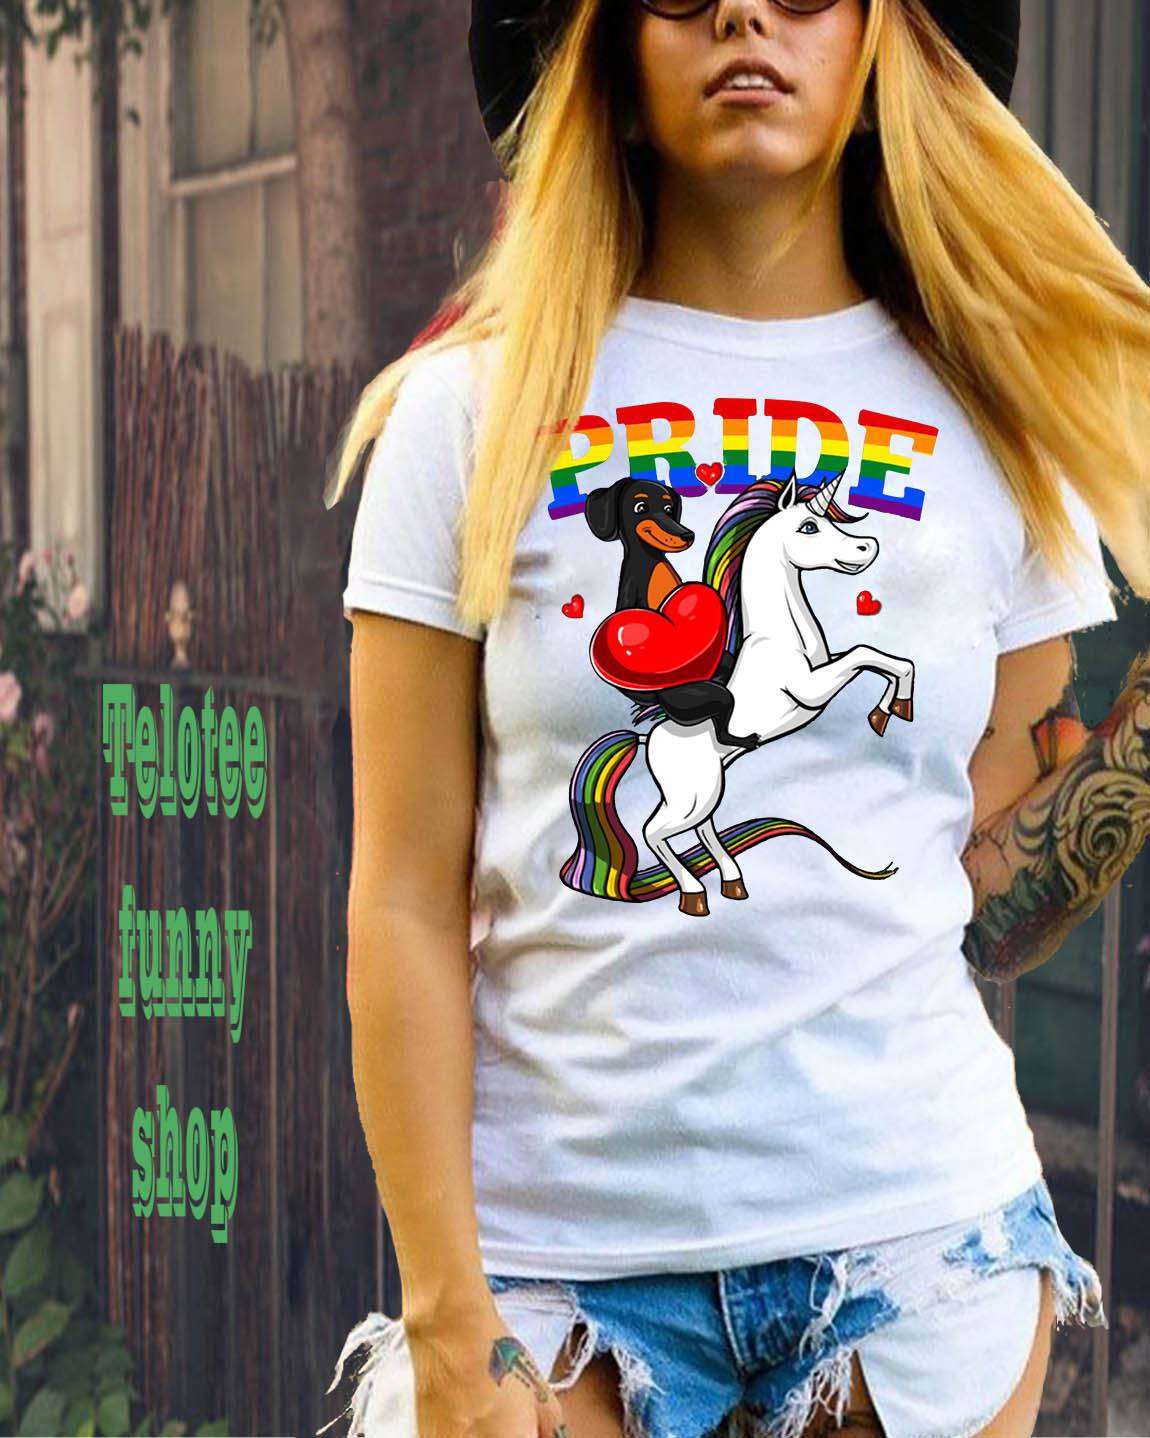 Pride Dachshund Riding Unicorn LGBT Pride